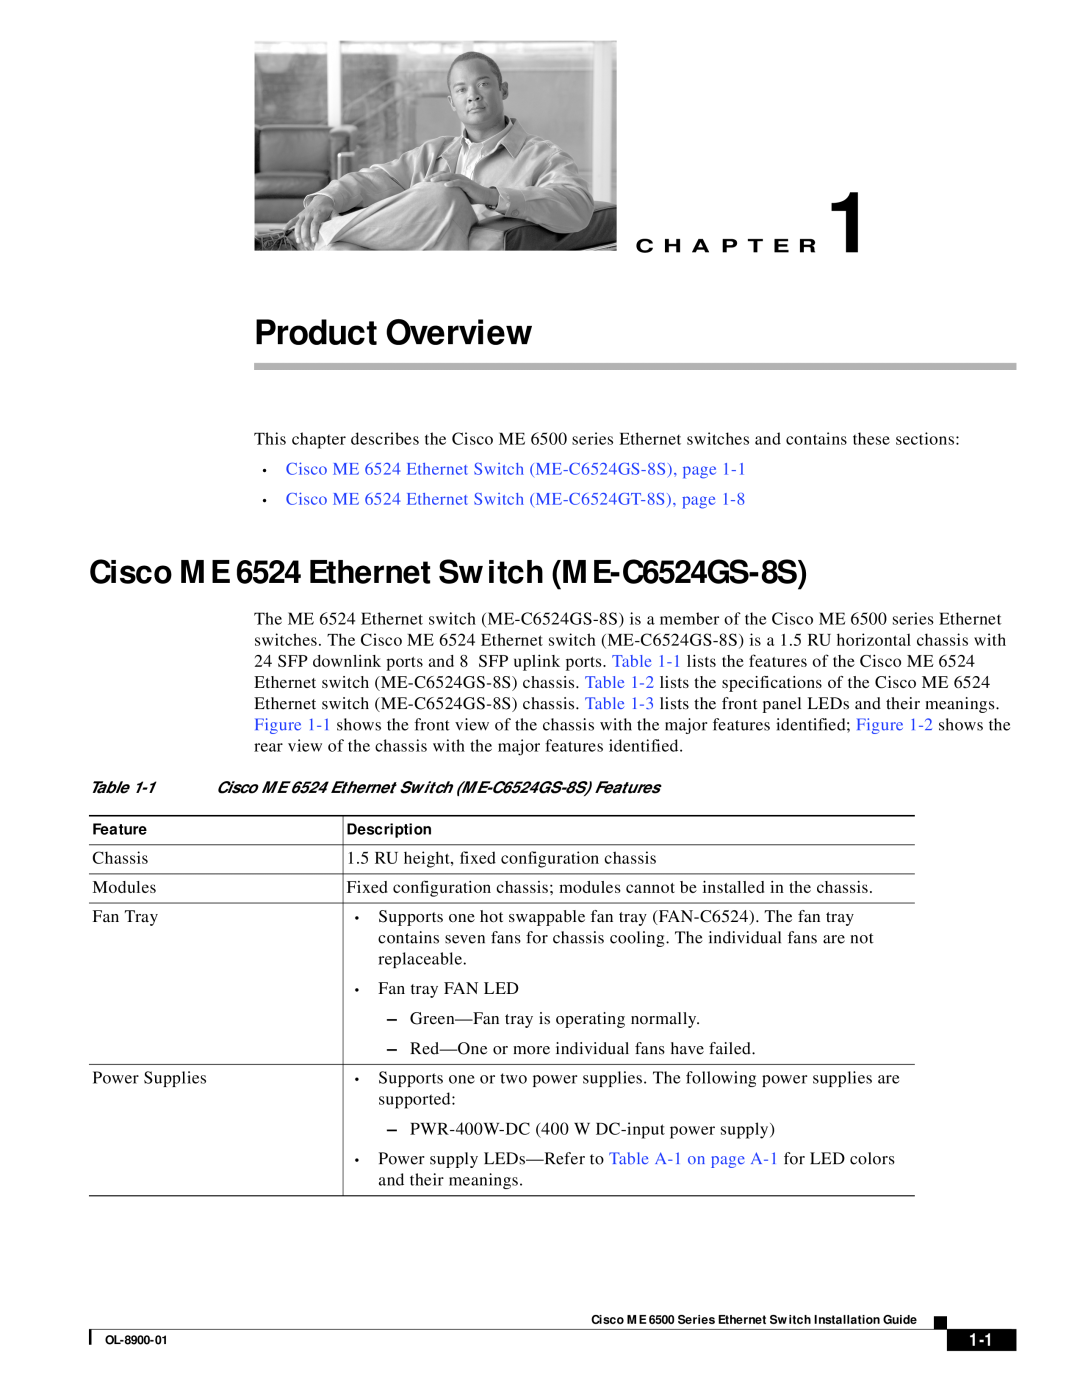 Cisco Systems ME 6500 specifications Cisco ME 6524 Ethernet Switch ME-C6524GS-8S, Feature, Description, Product Overview 